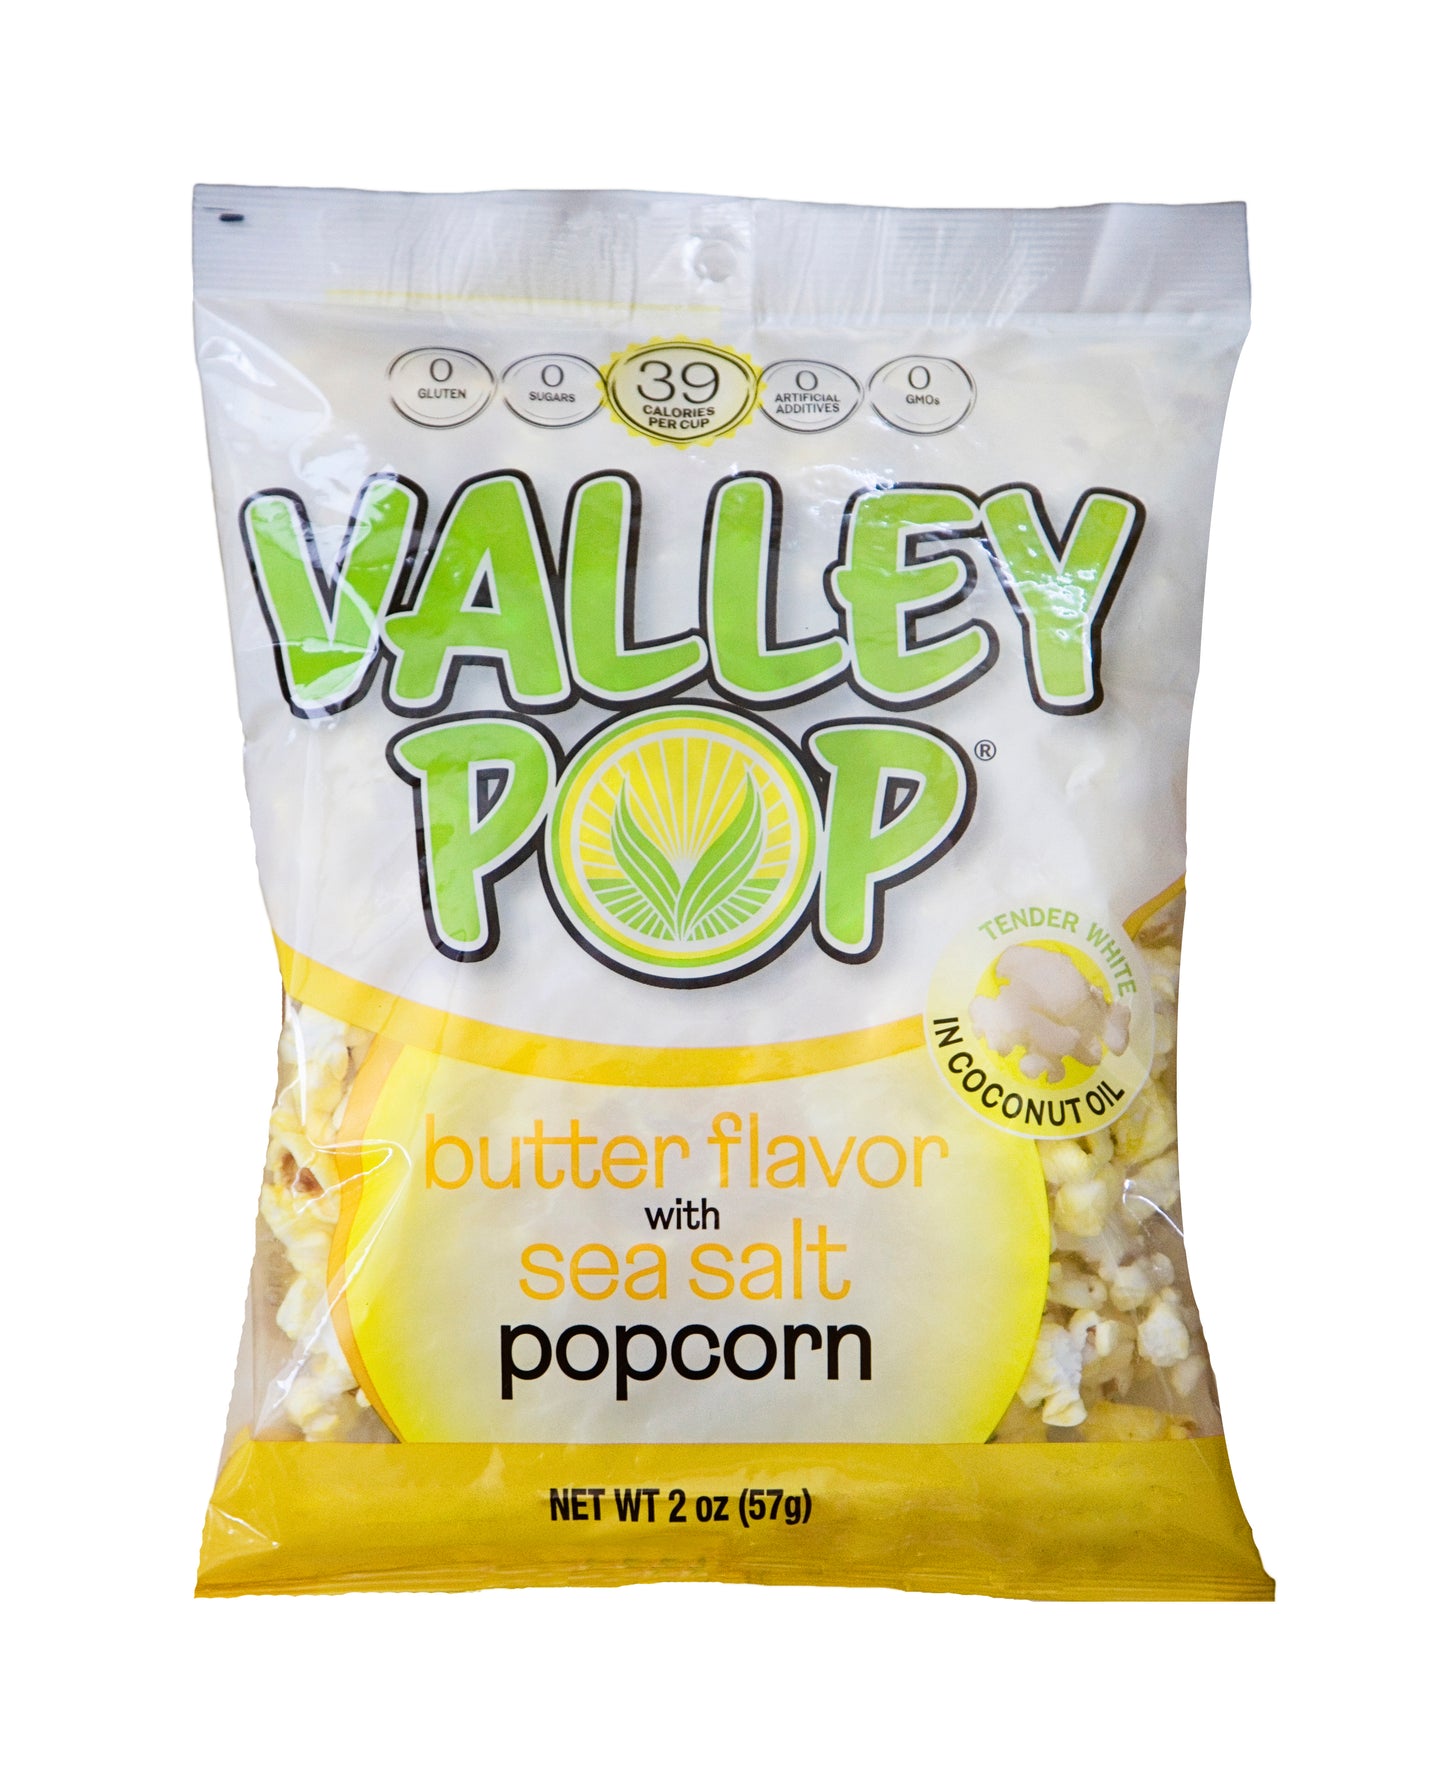 2 oz Bag of Yellow Popcorn